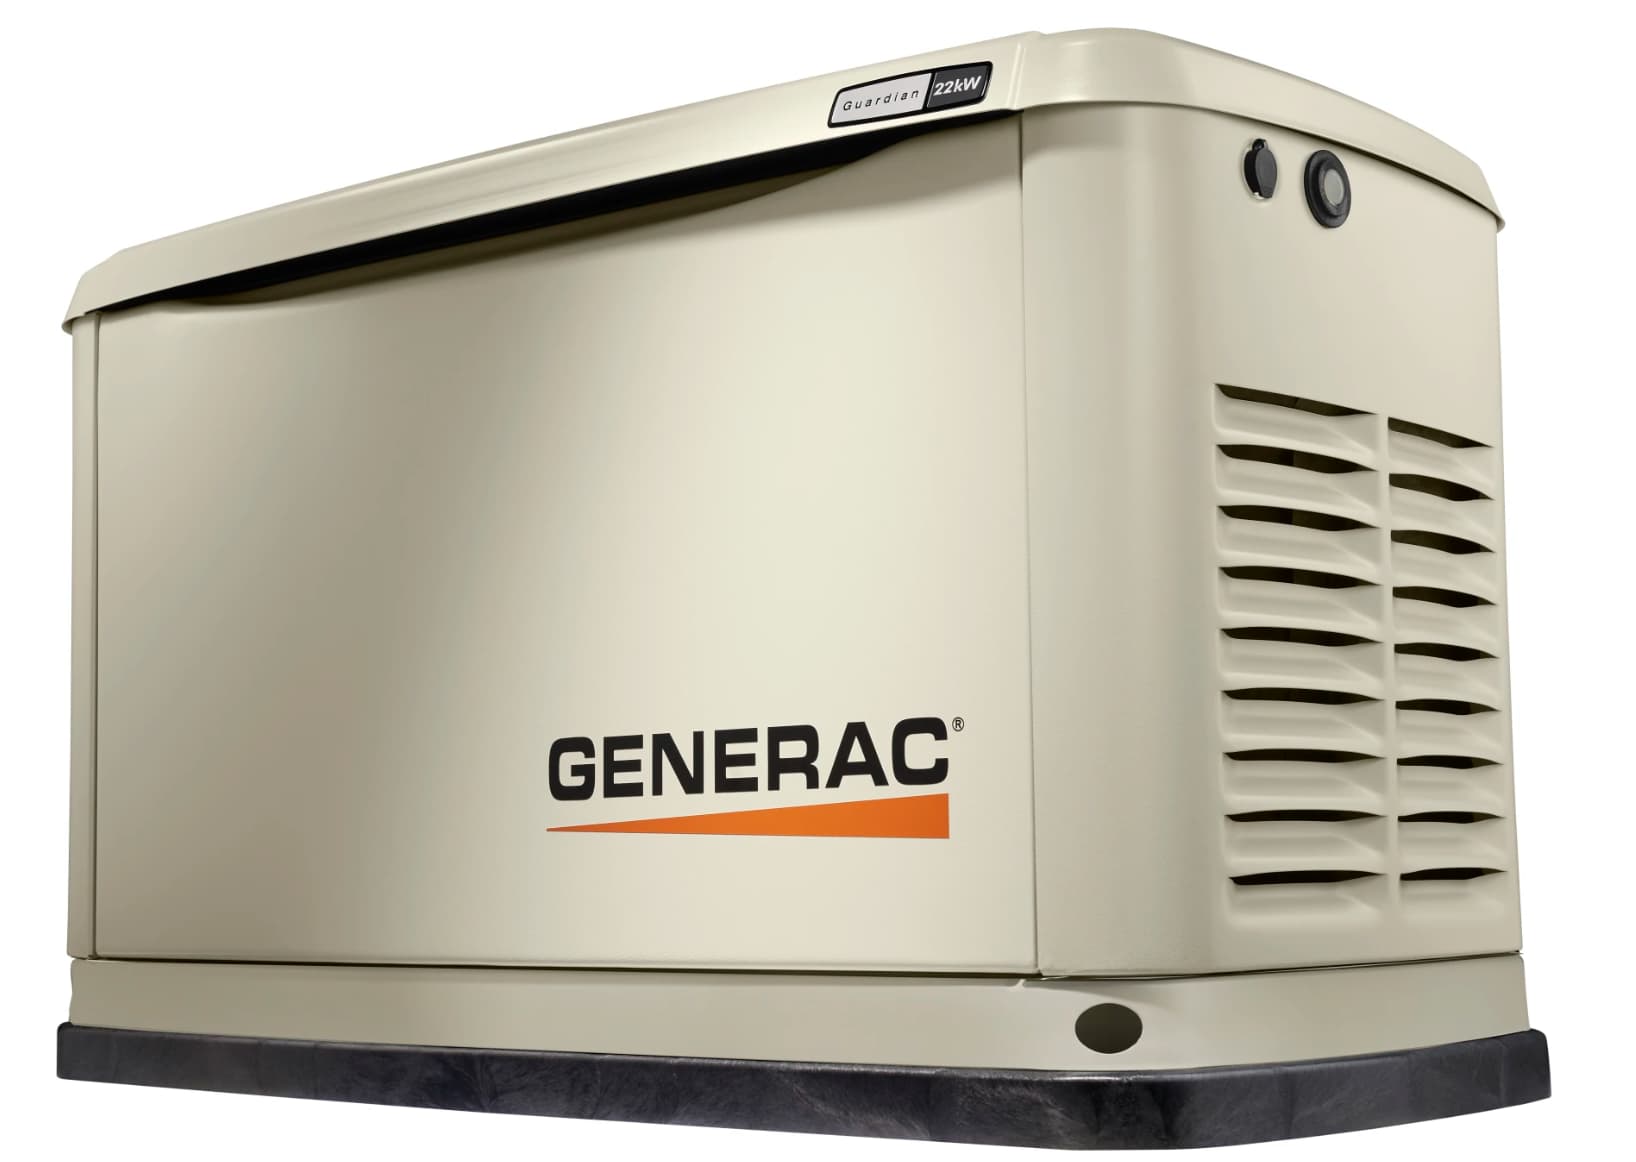 Cost Factors for Installing a Generac 22kW Generator